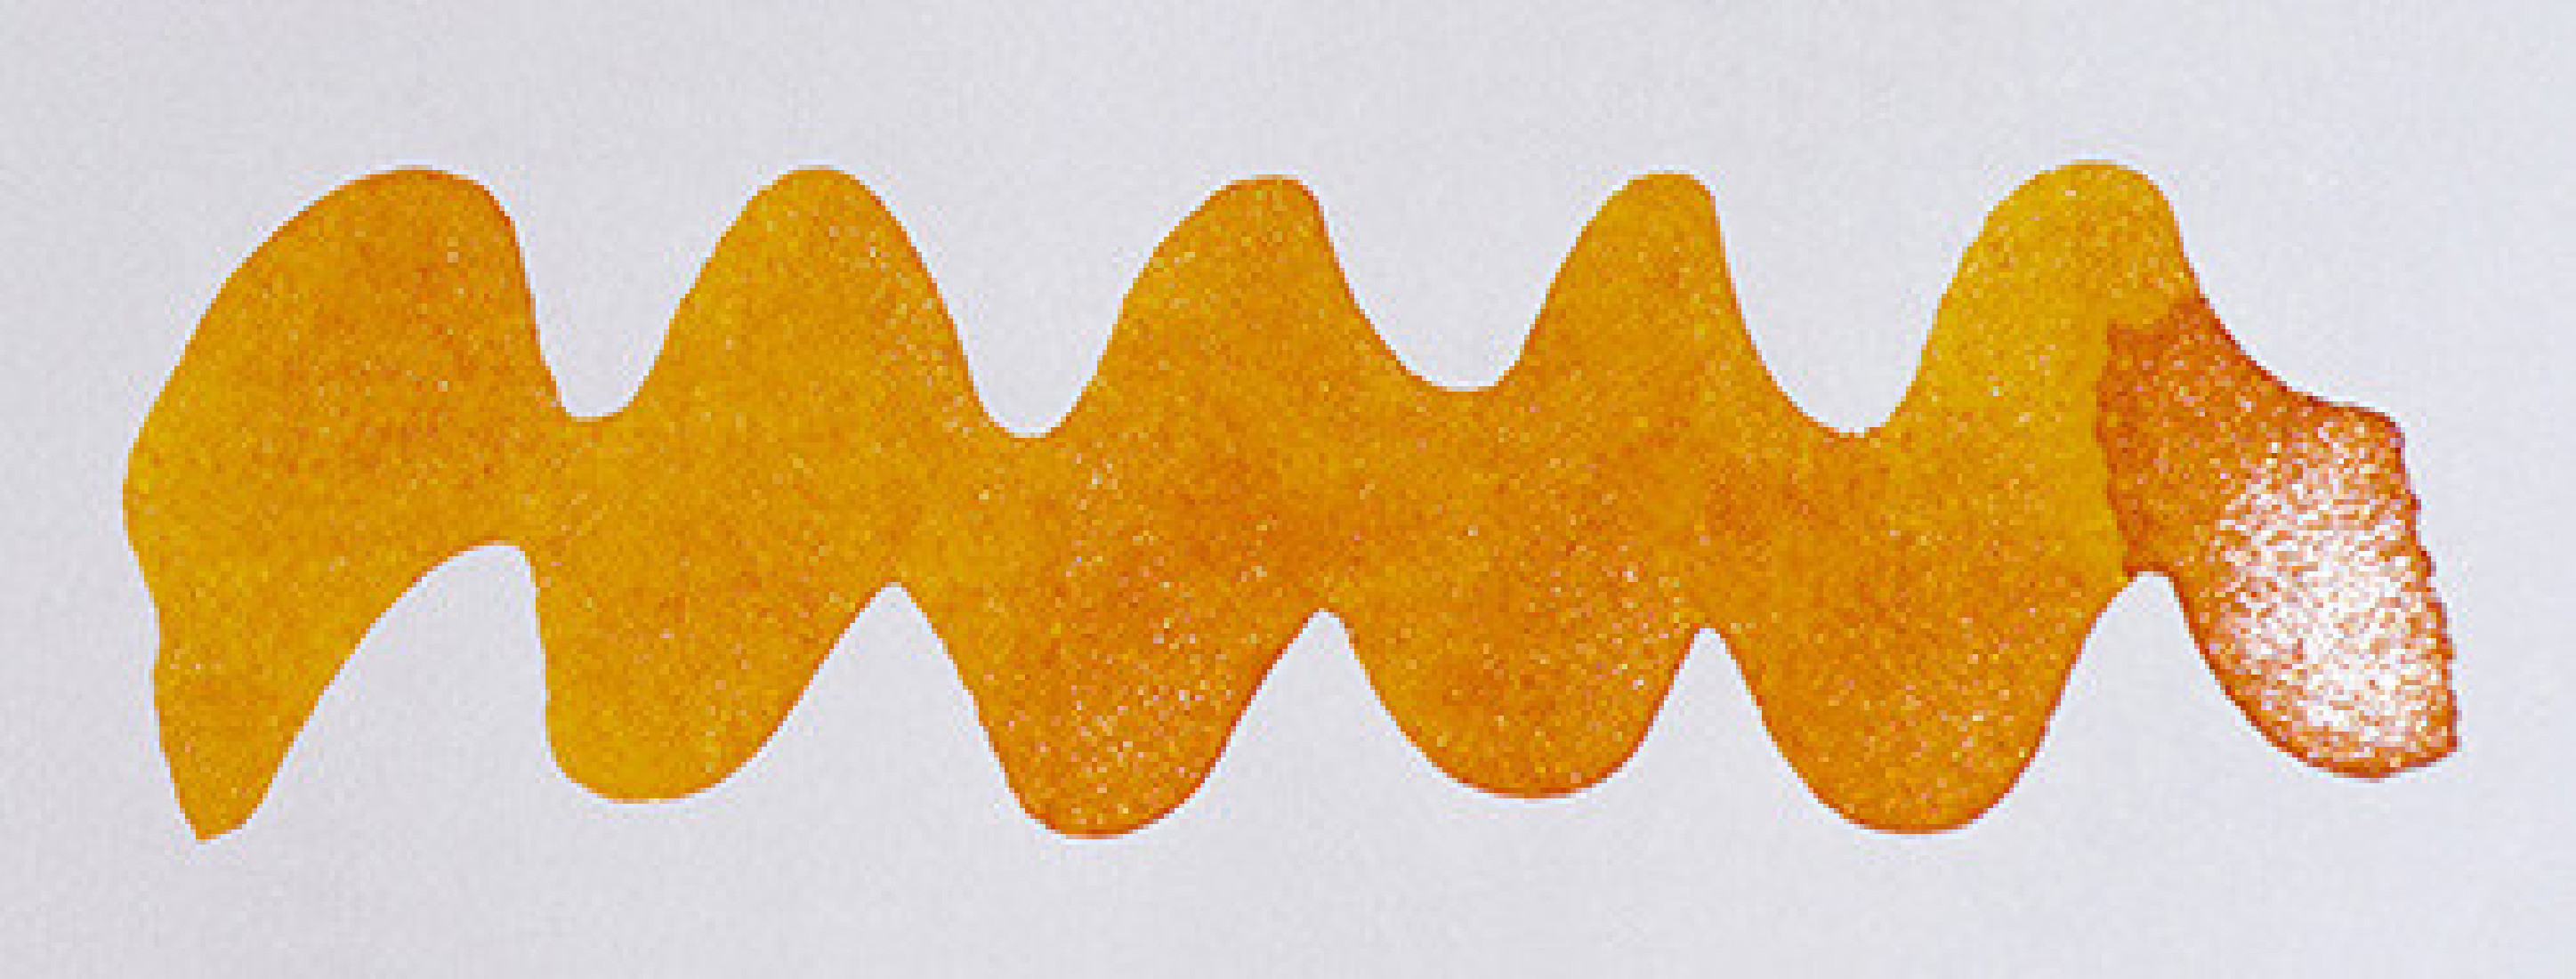 Diamine 50ml Citrus Ice Fountain pen shimmer ink